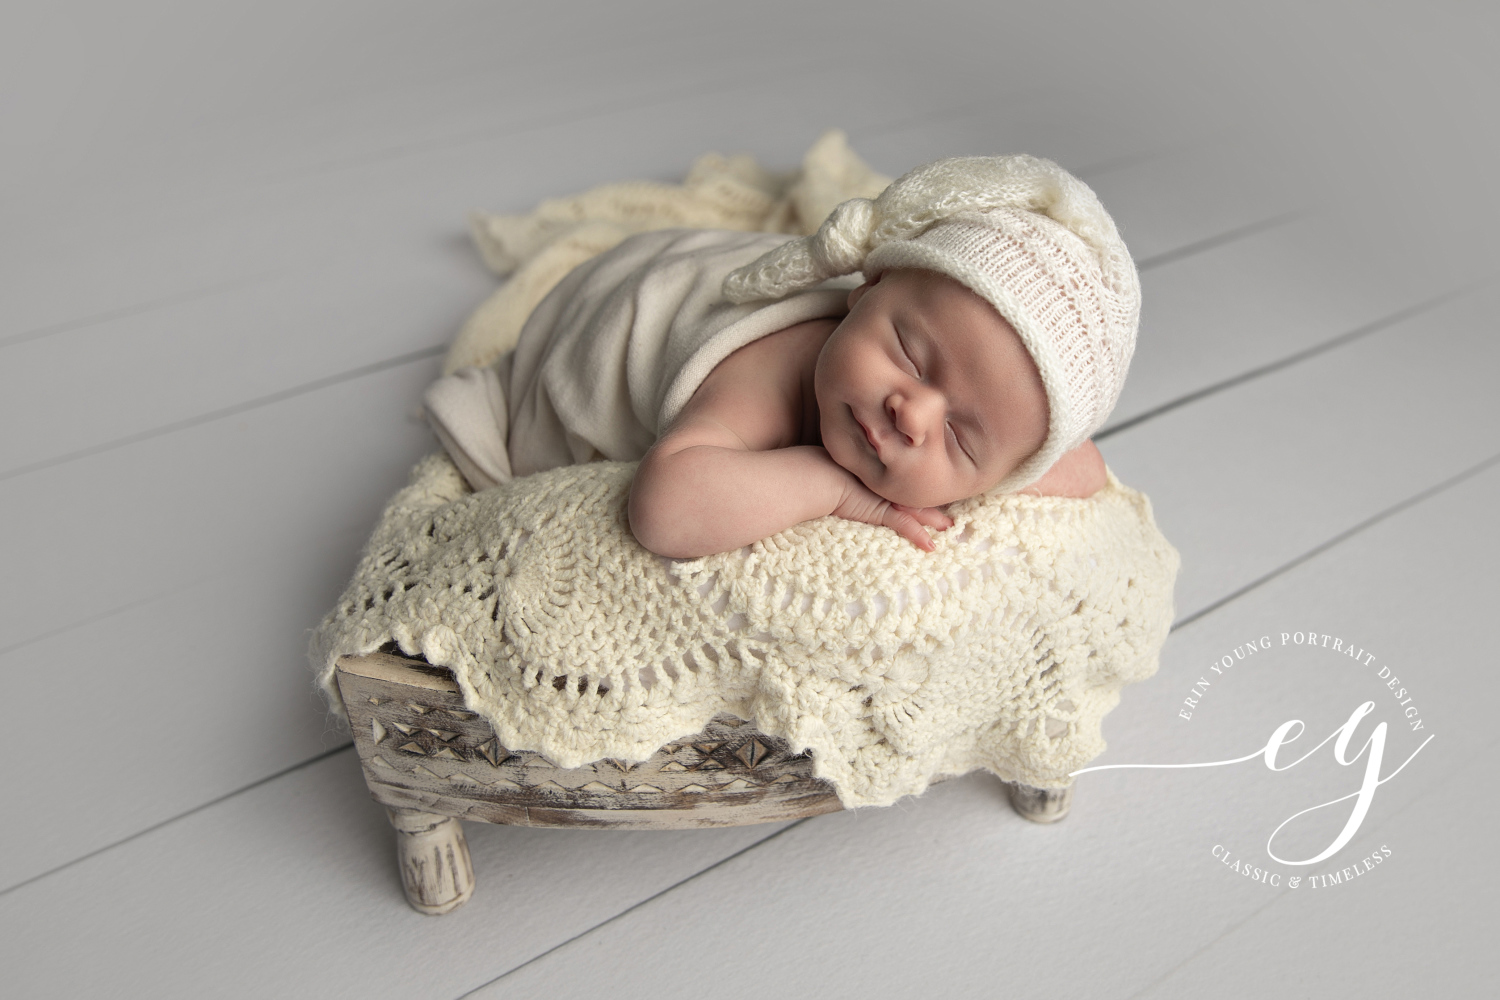 erin-young-portrait-design-maternity--newborns-BU32E3NMR244.jpg